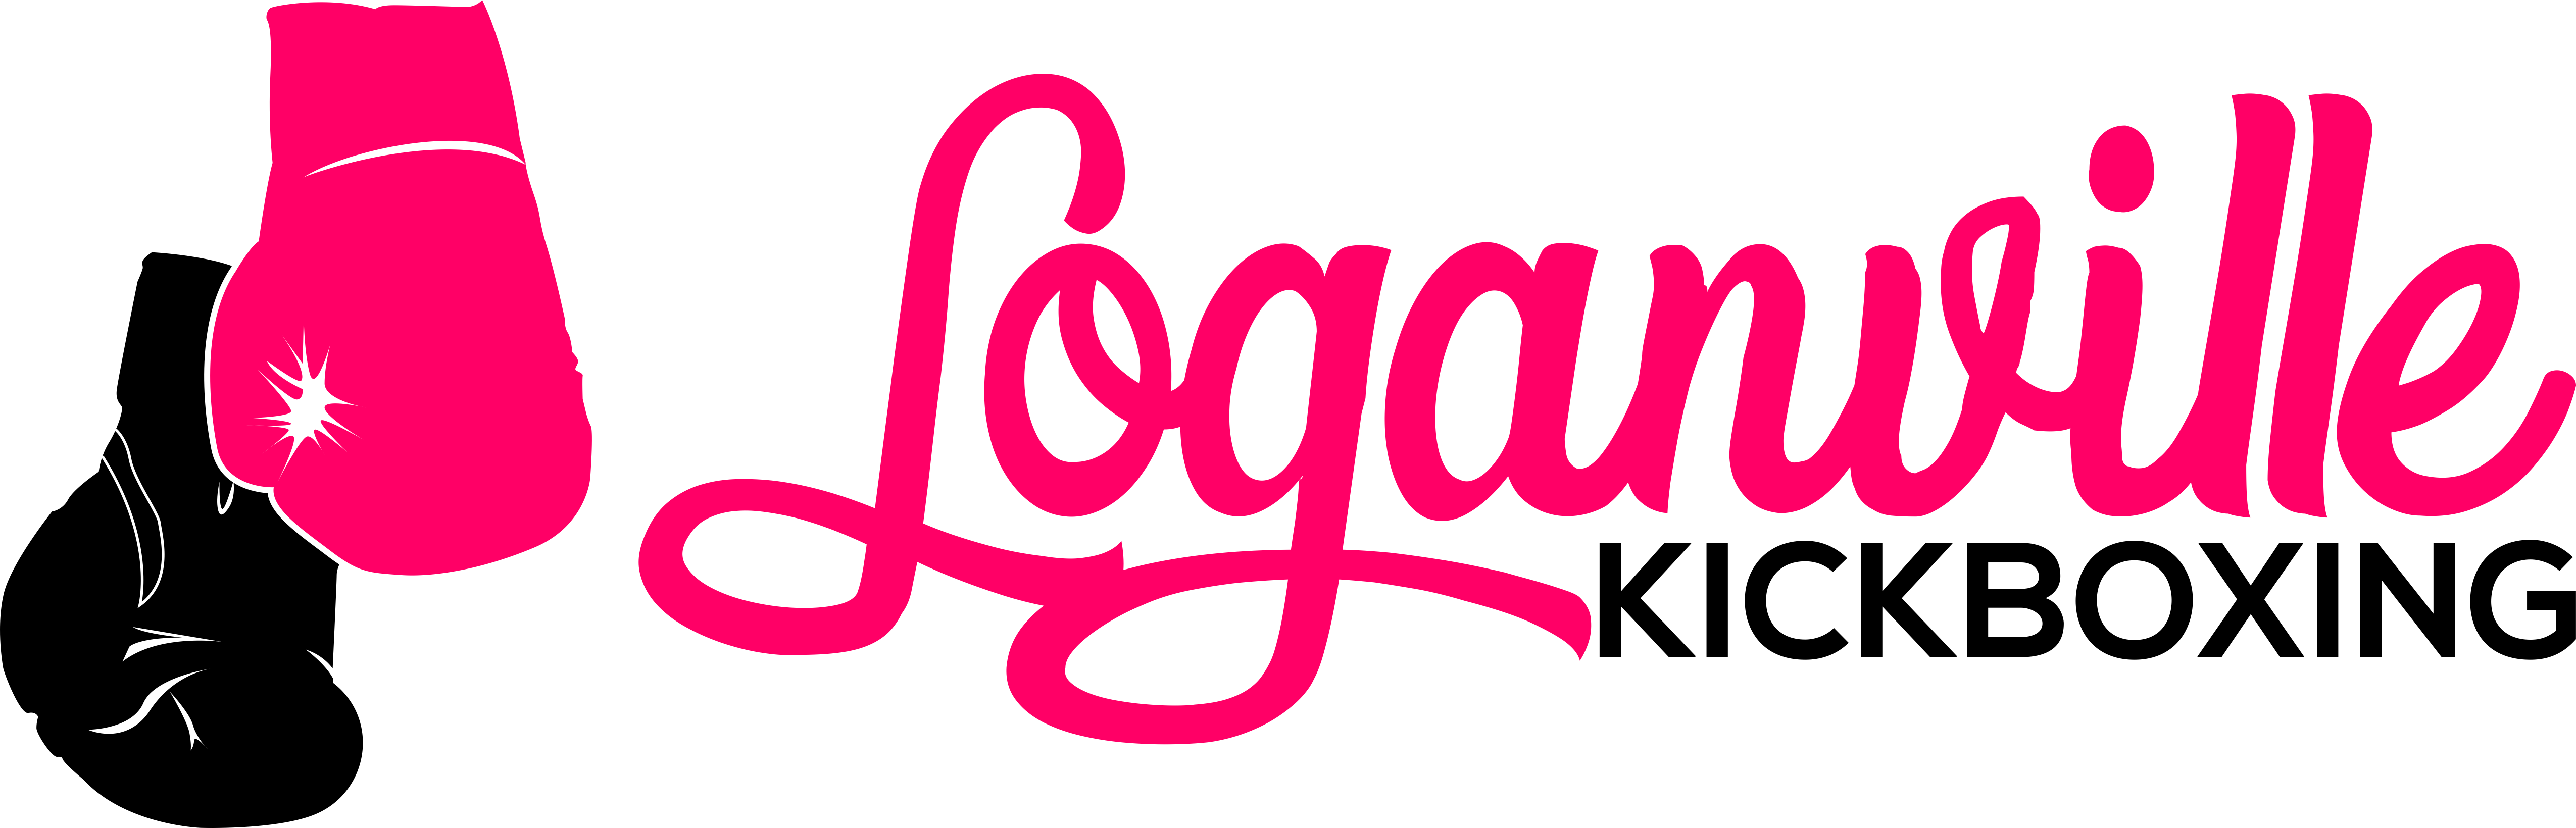 Loganville Kickboxing Logo